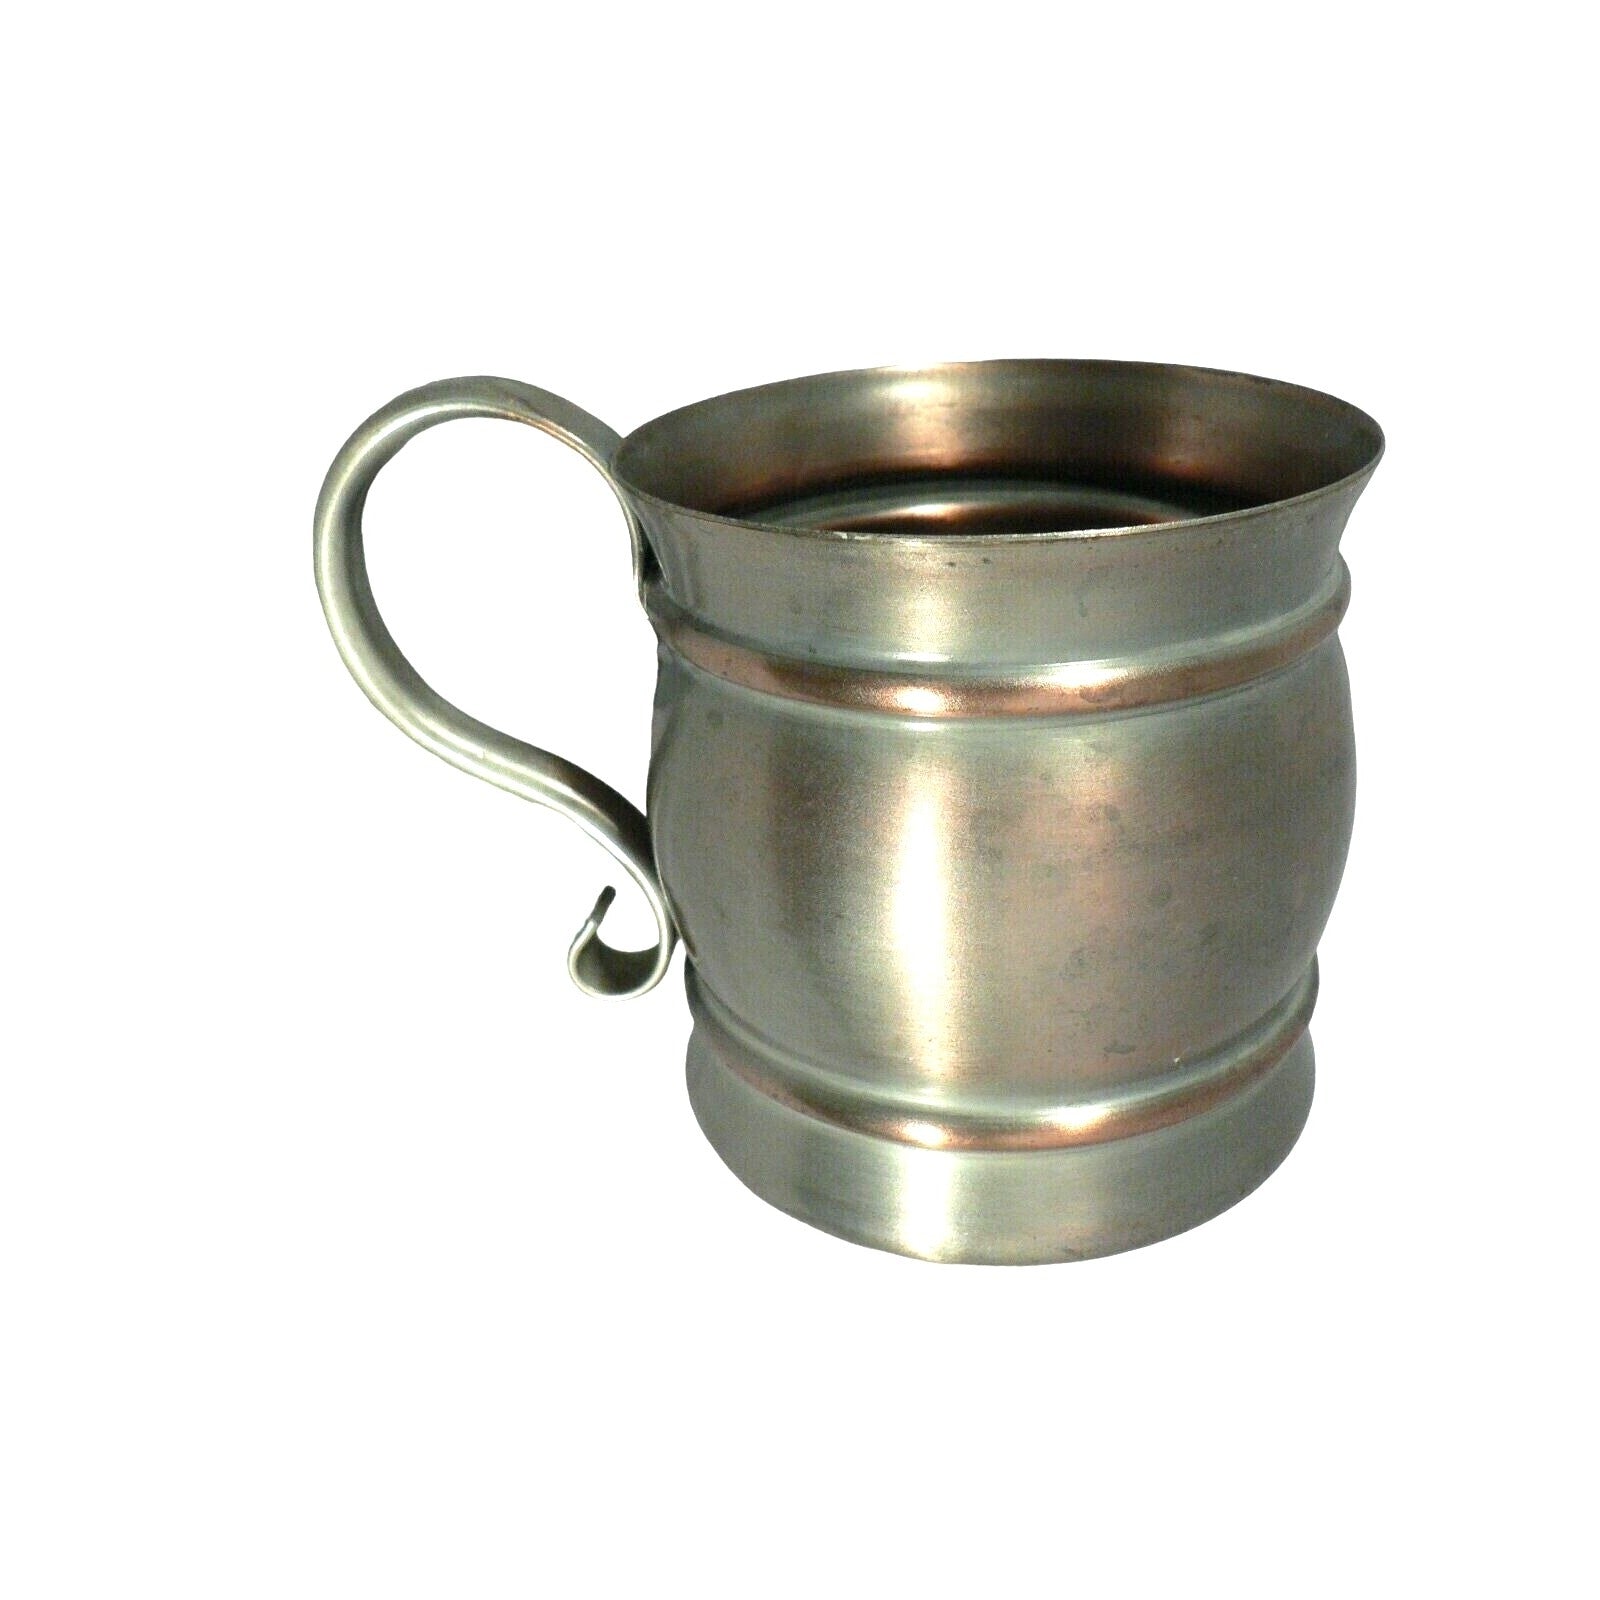 Copper cup mug mule by Gregorian Question mark handle nice even patina Vintage